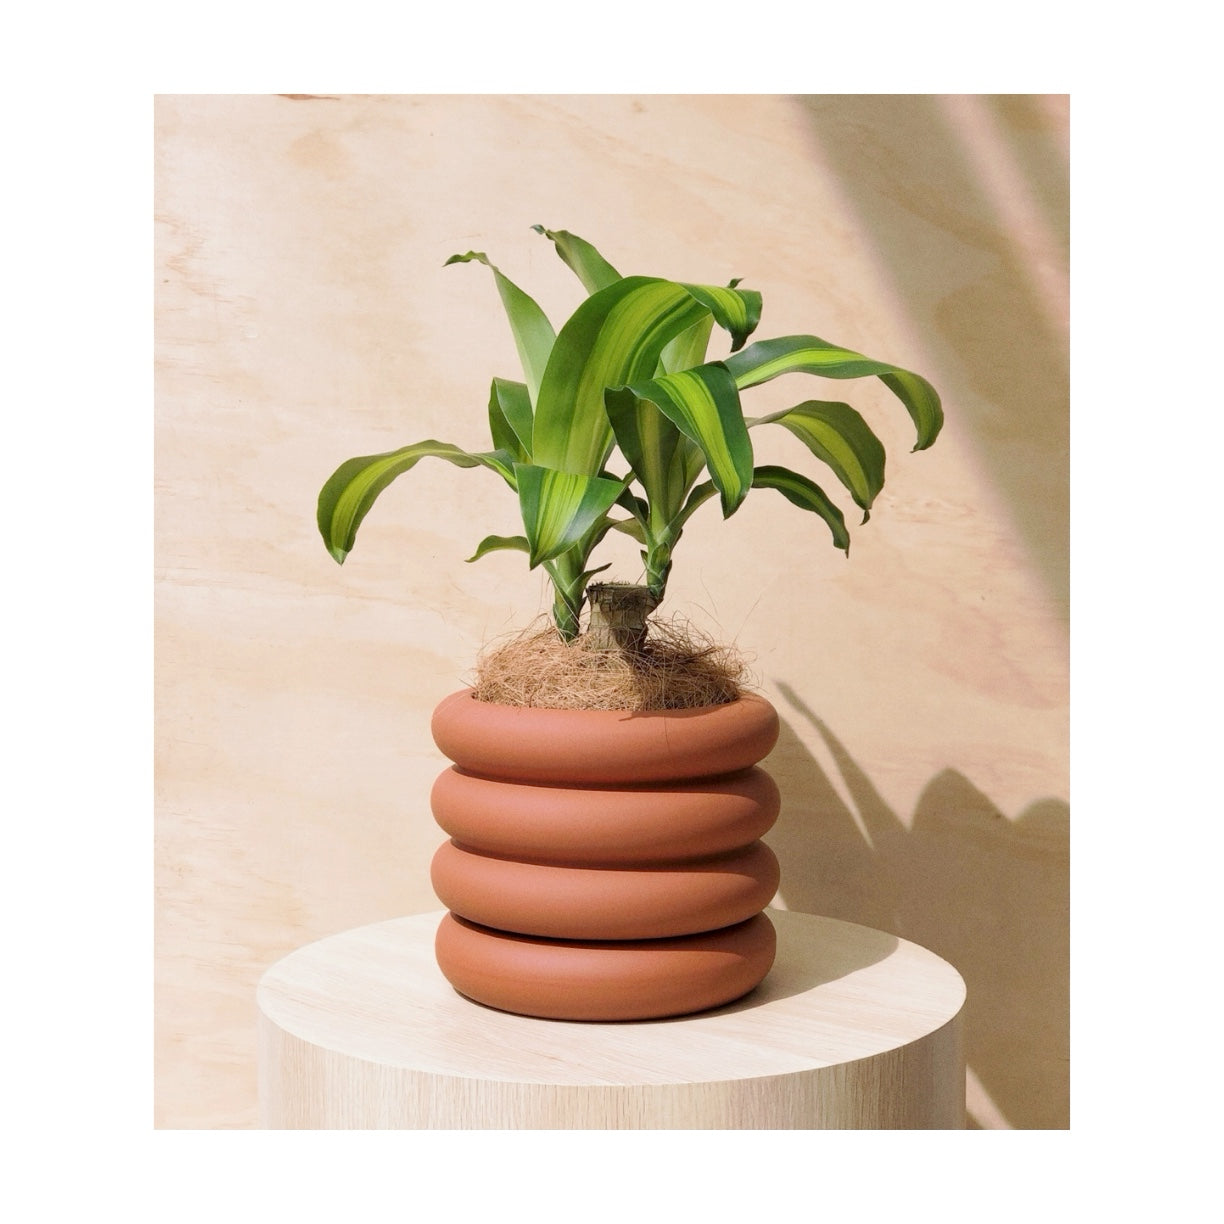 happy plant (dracaena fragrans) indoor plant + curvy ceramic plant pot hidden saucer